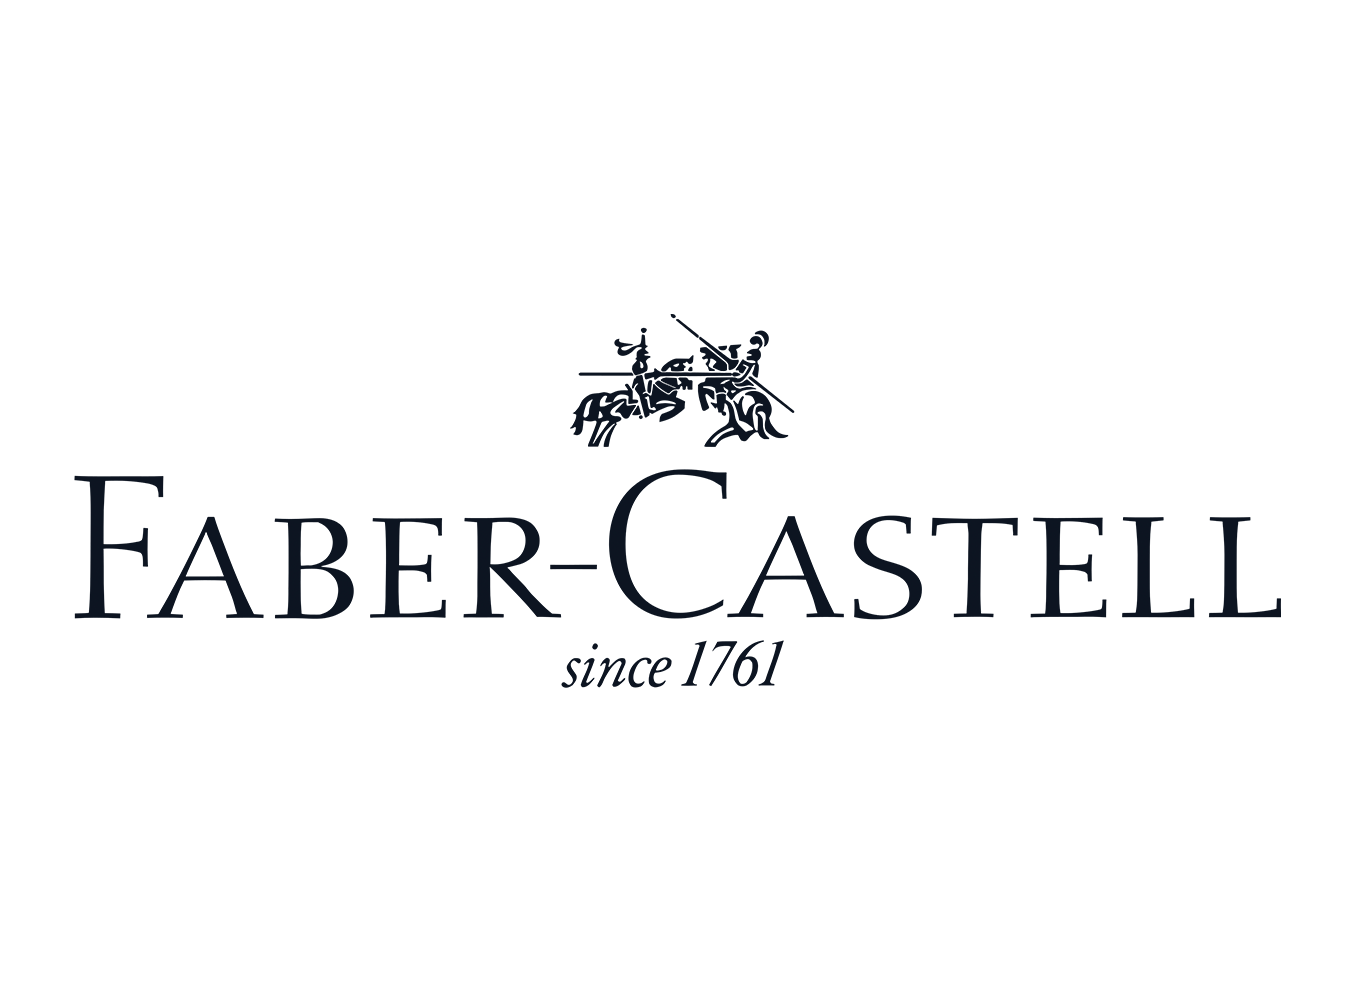 Logo Faber Castell